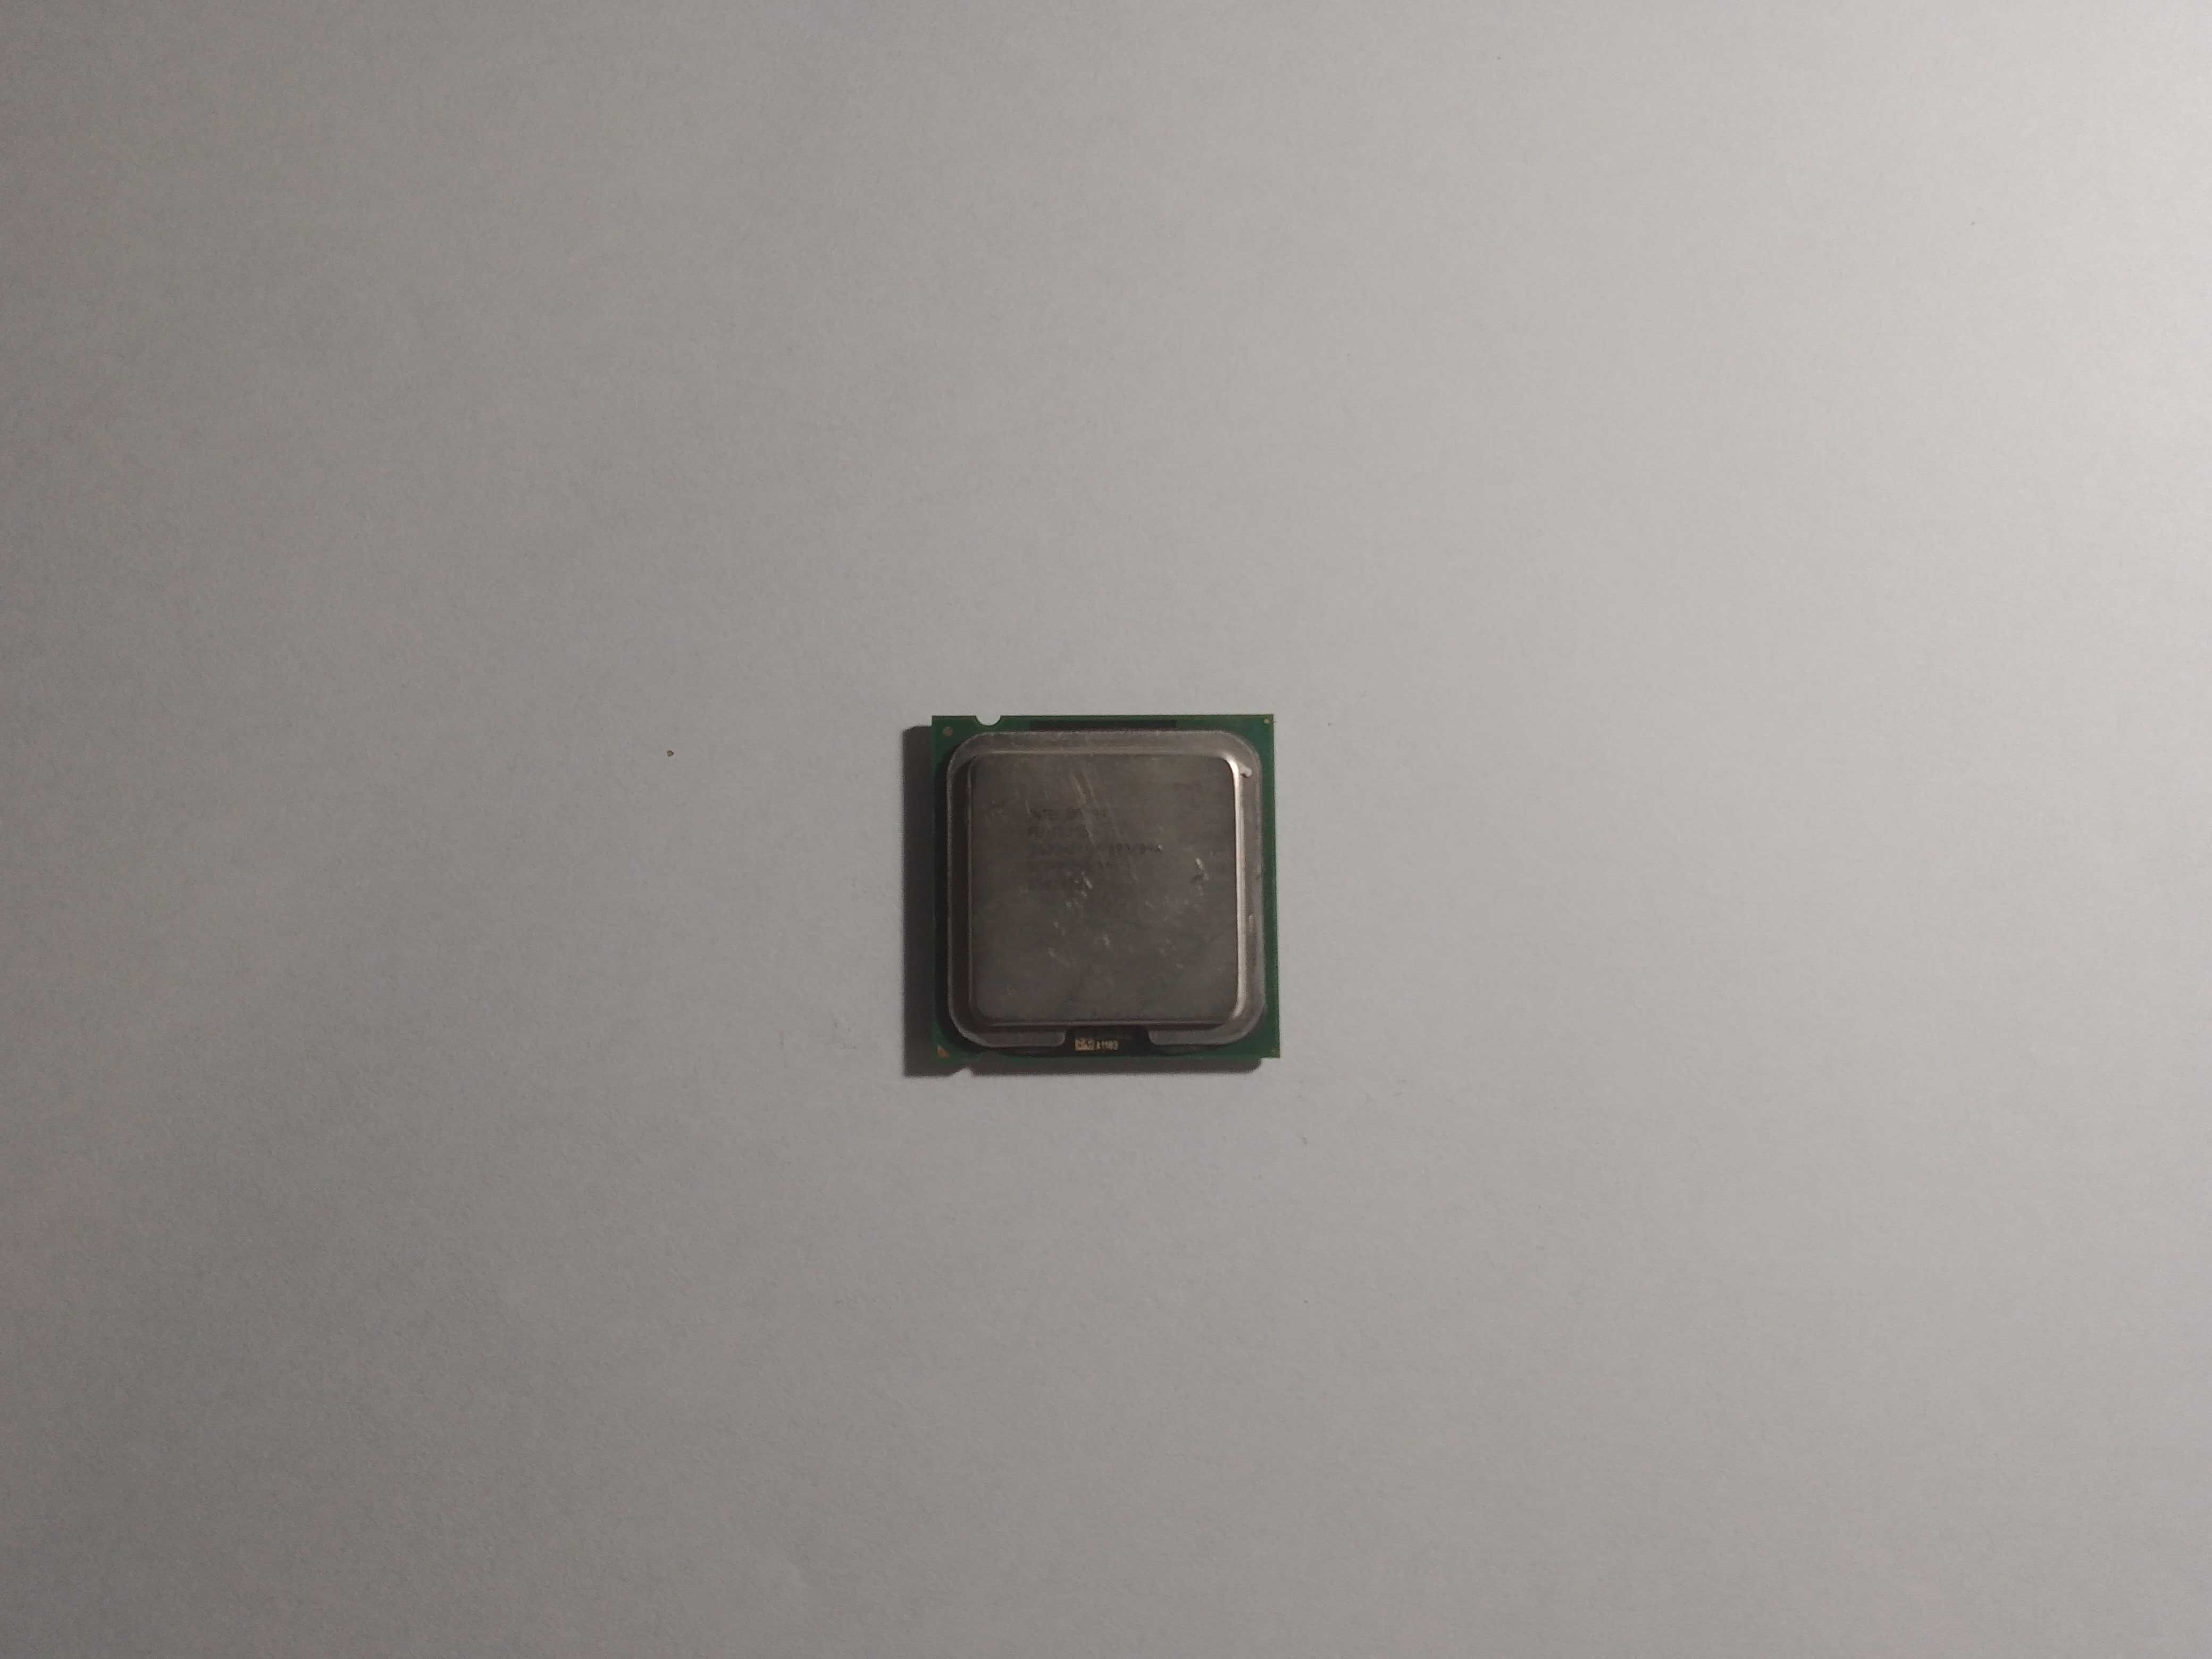 Procesor Intel Pentium 4, 2.8 GHz